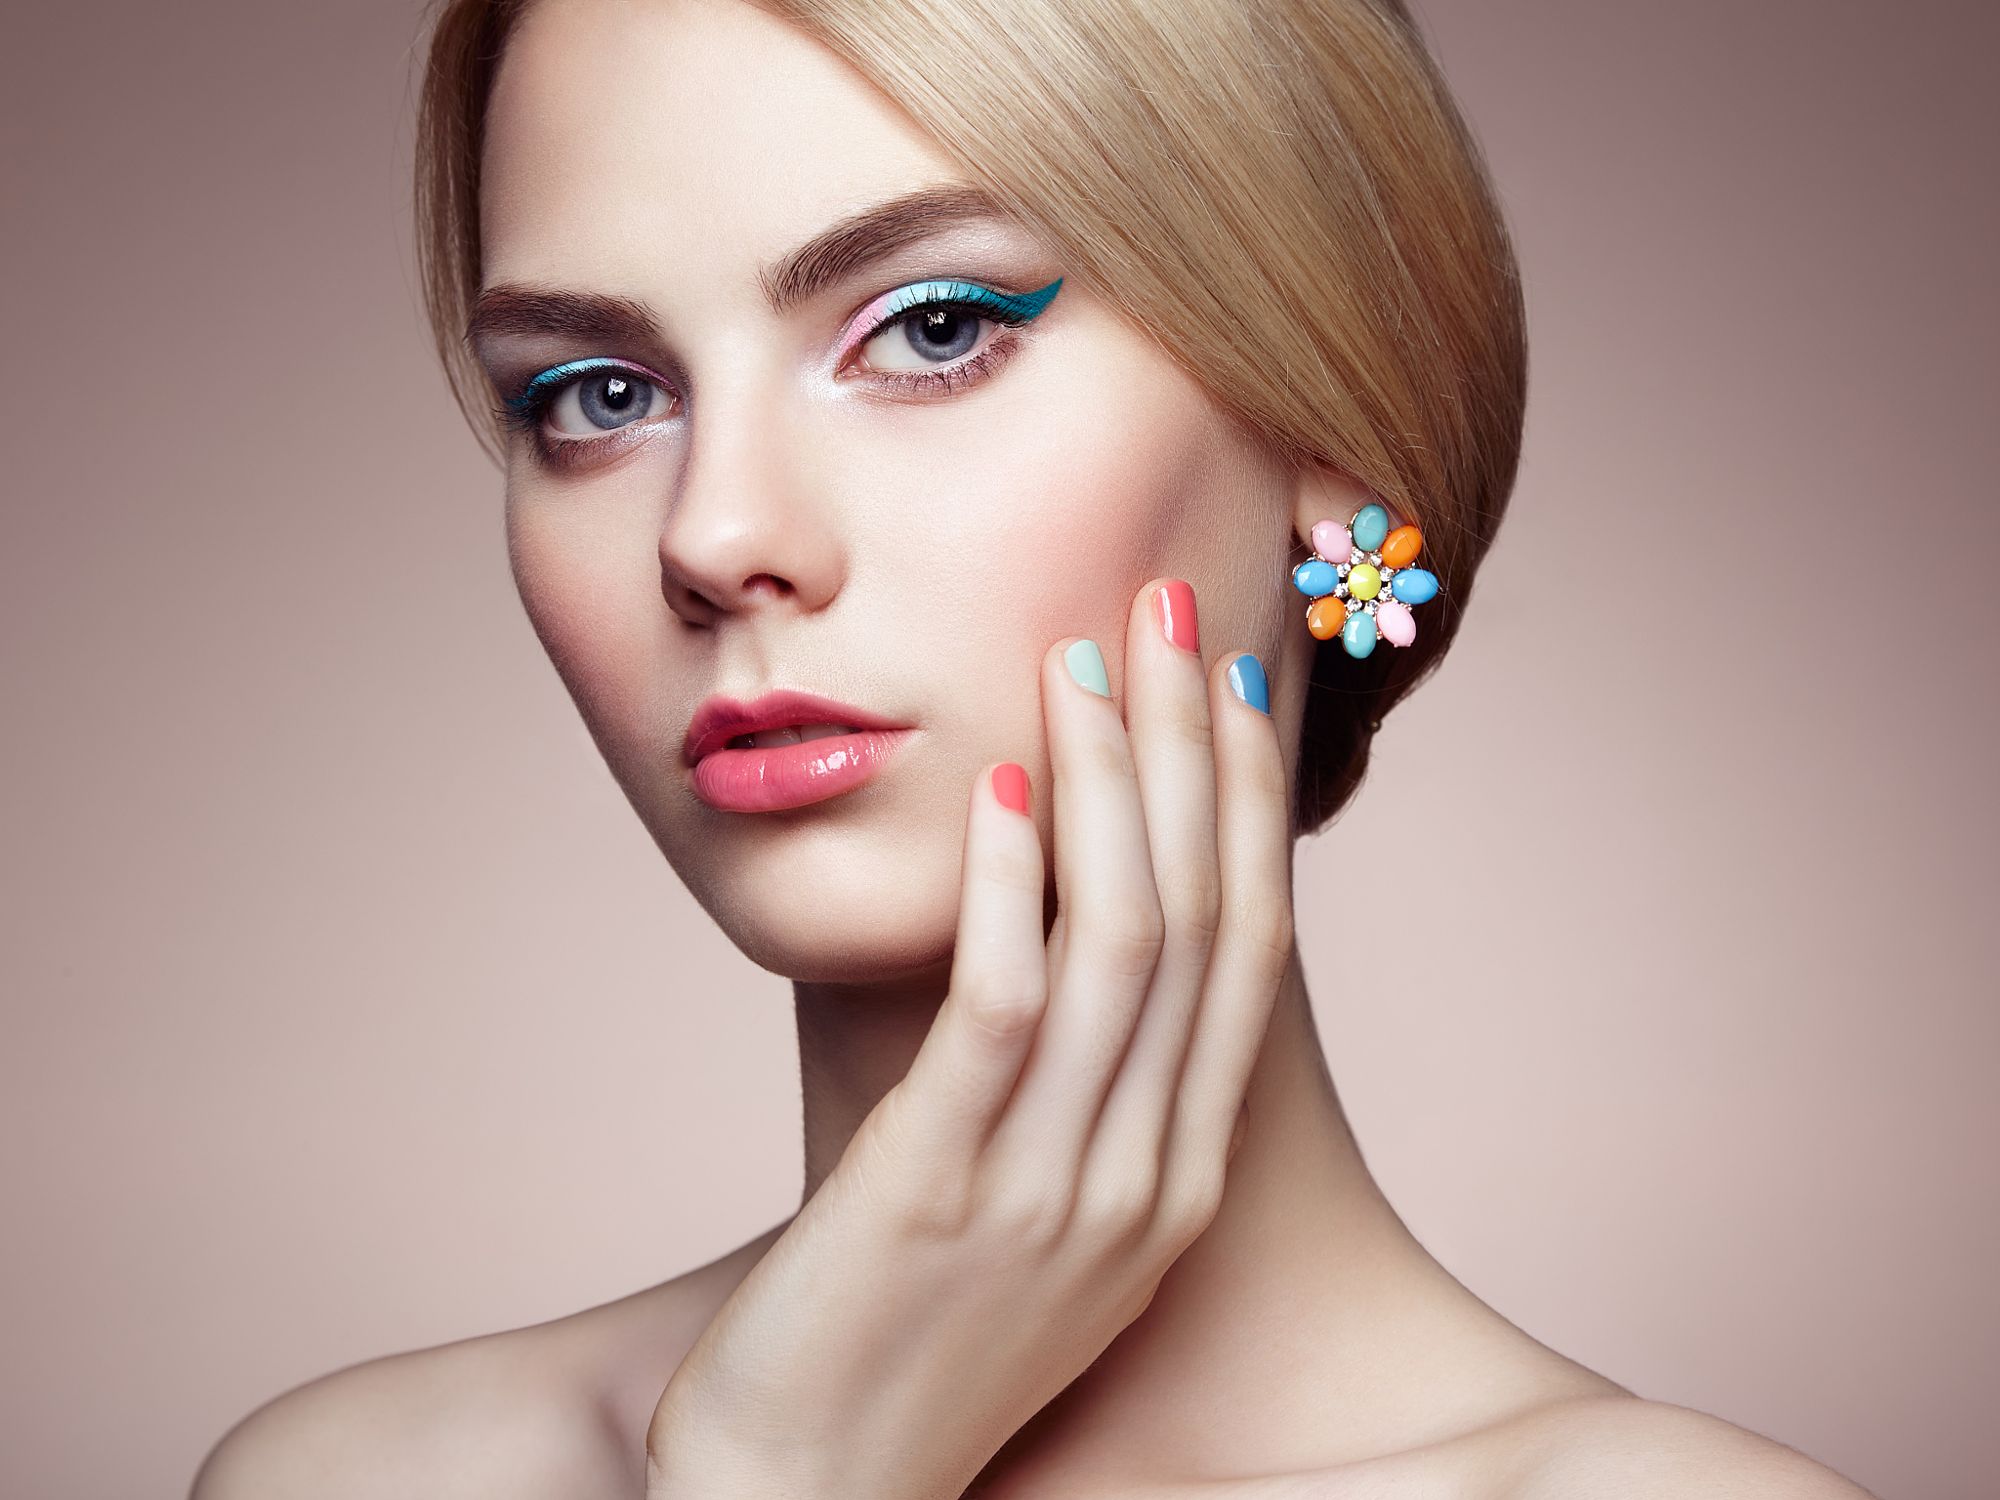 Oleg Gekman Women Blonde Hairbun Make Up Eyeshadow Colorful Lipstick Gloss Fashion Hand On Face Simp 2000x1500